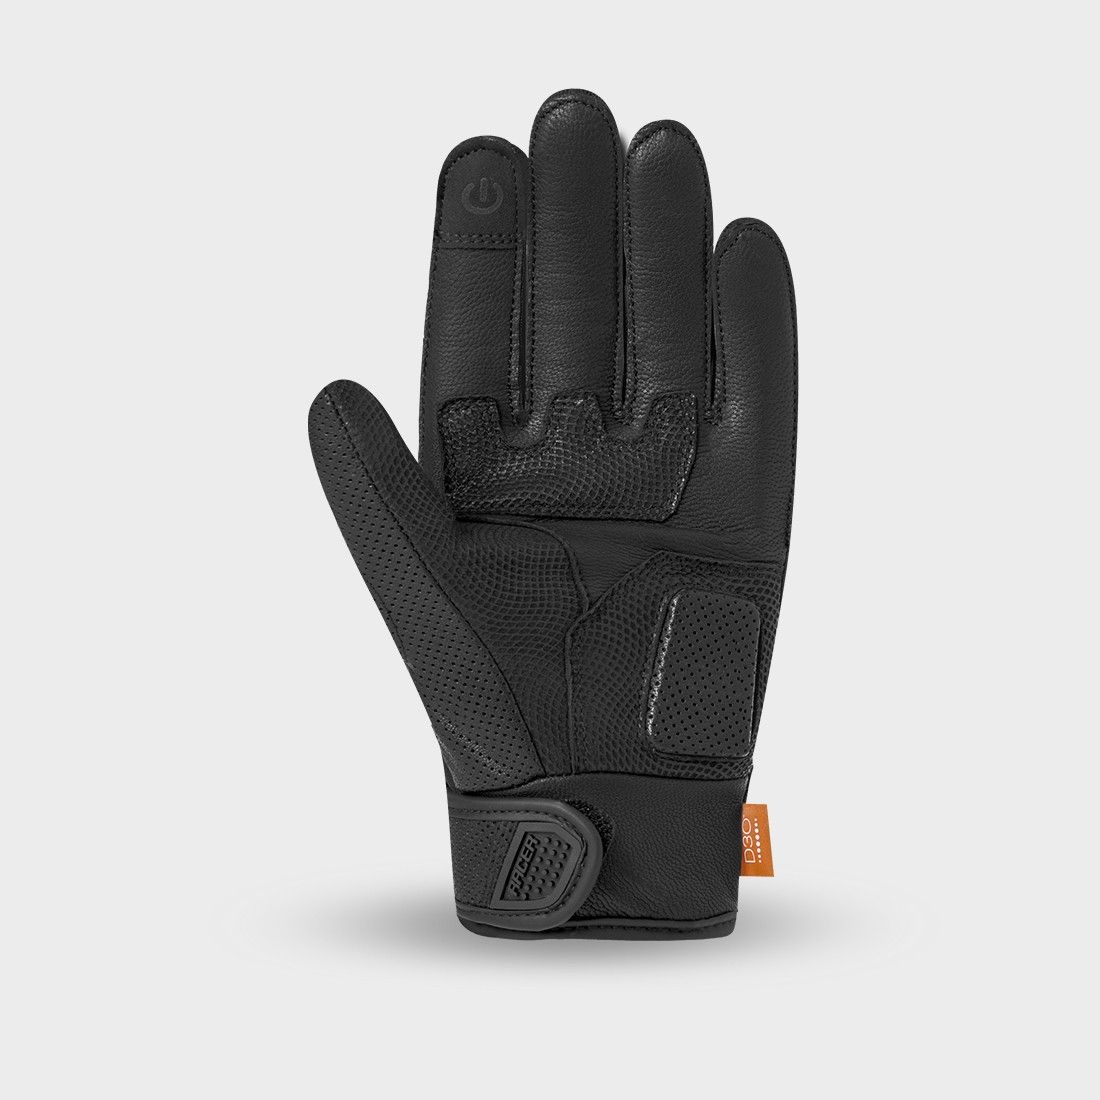 META 3 - Motorcycle gloves